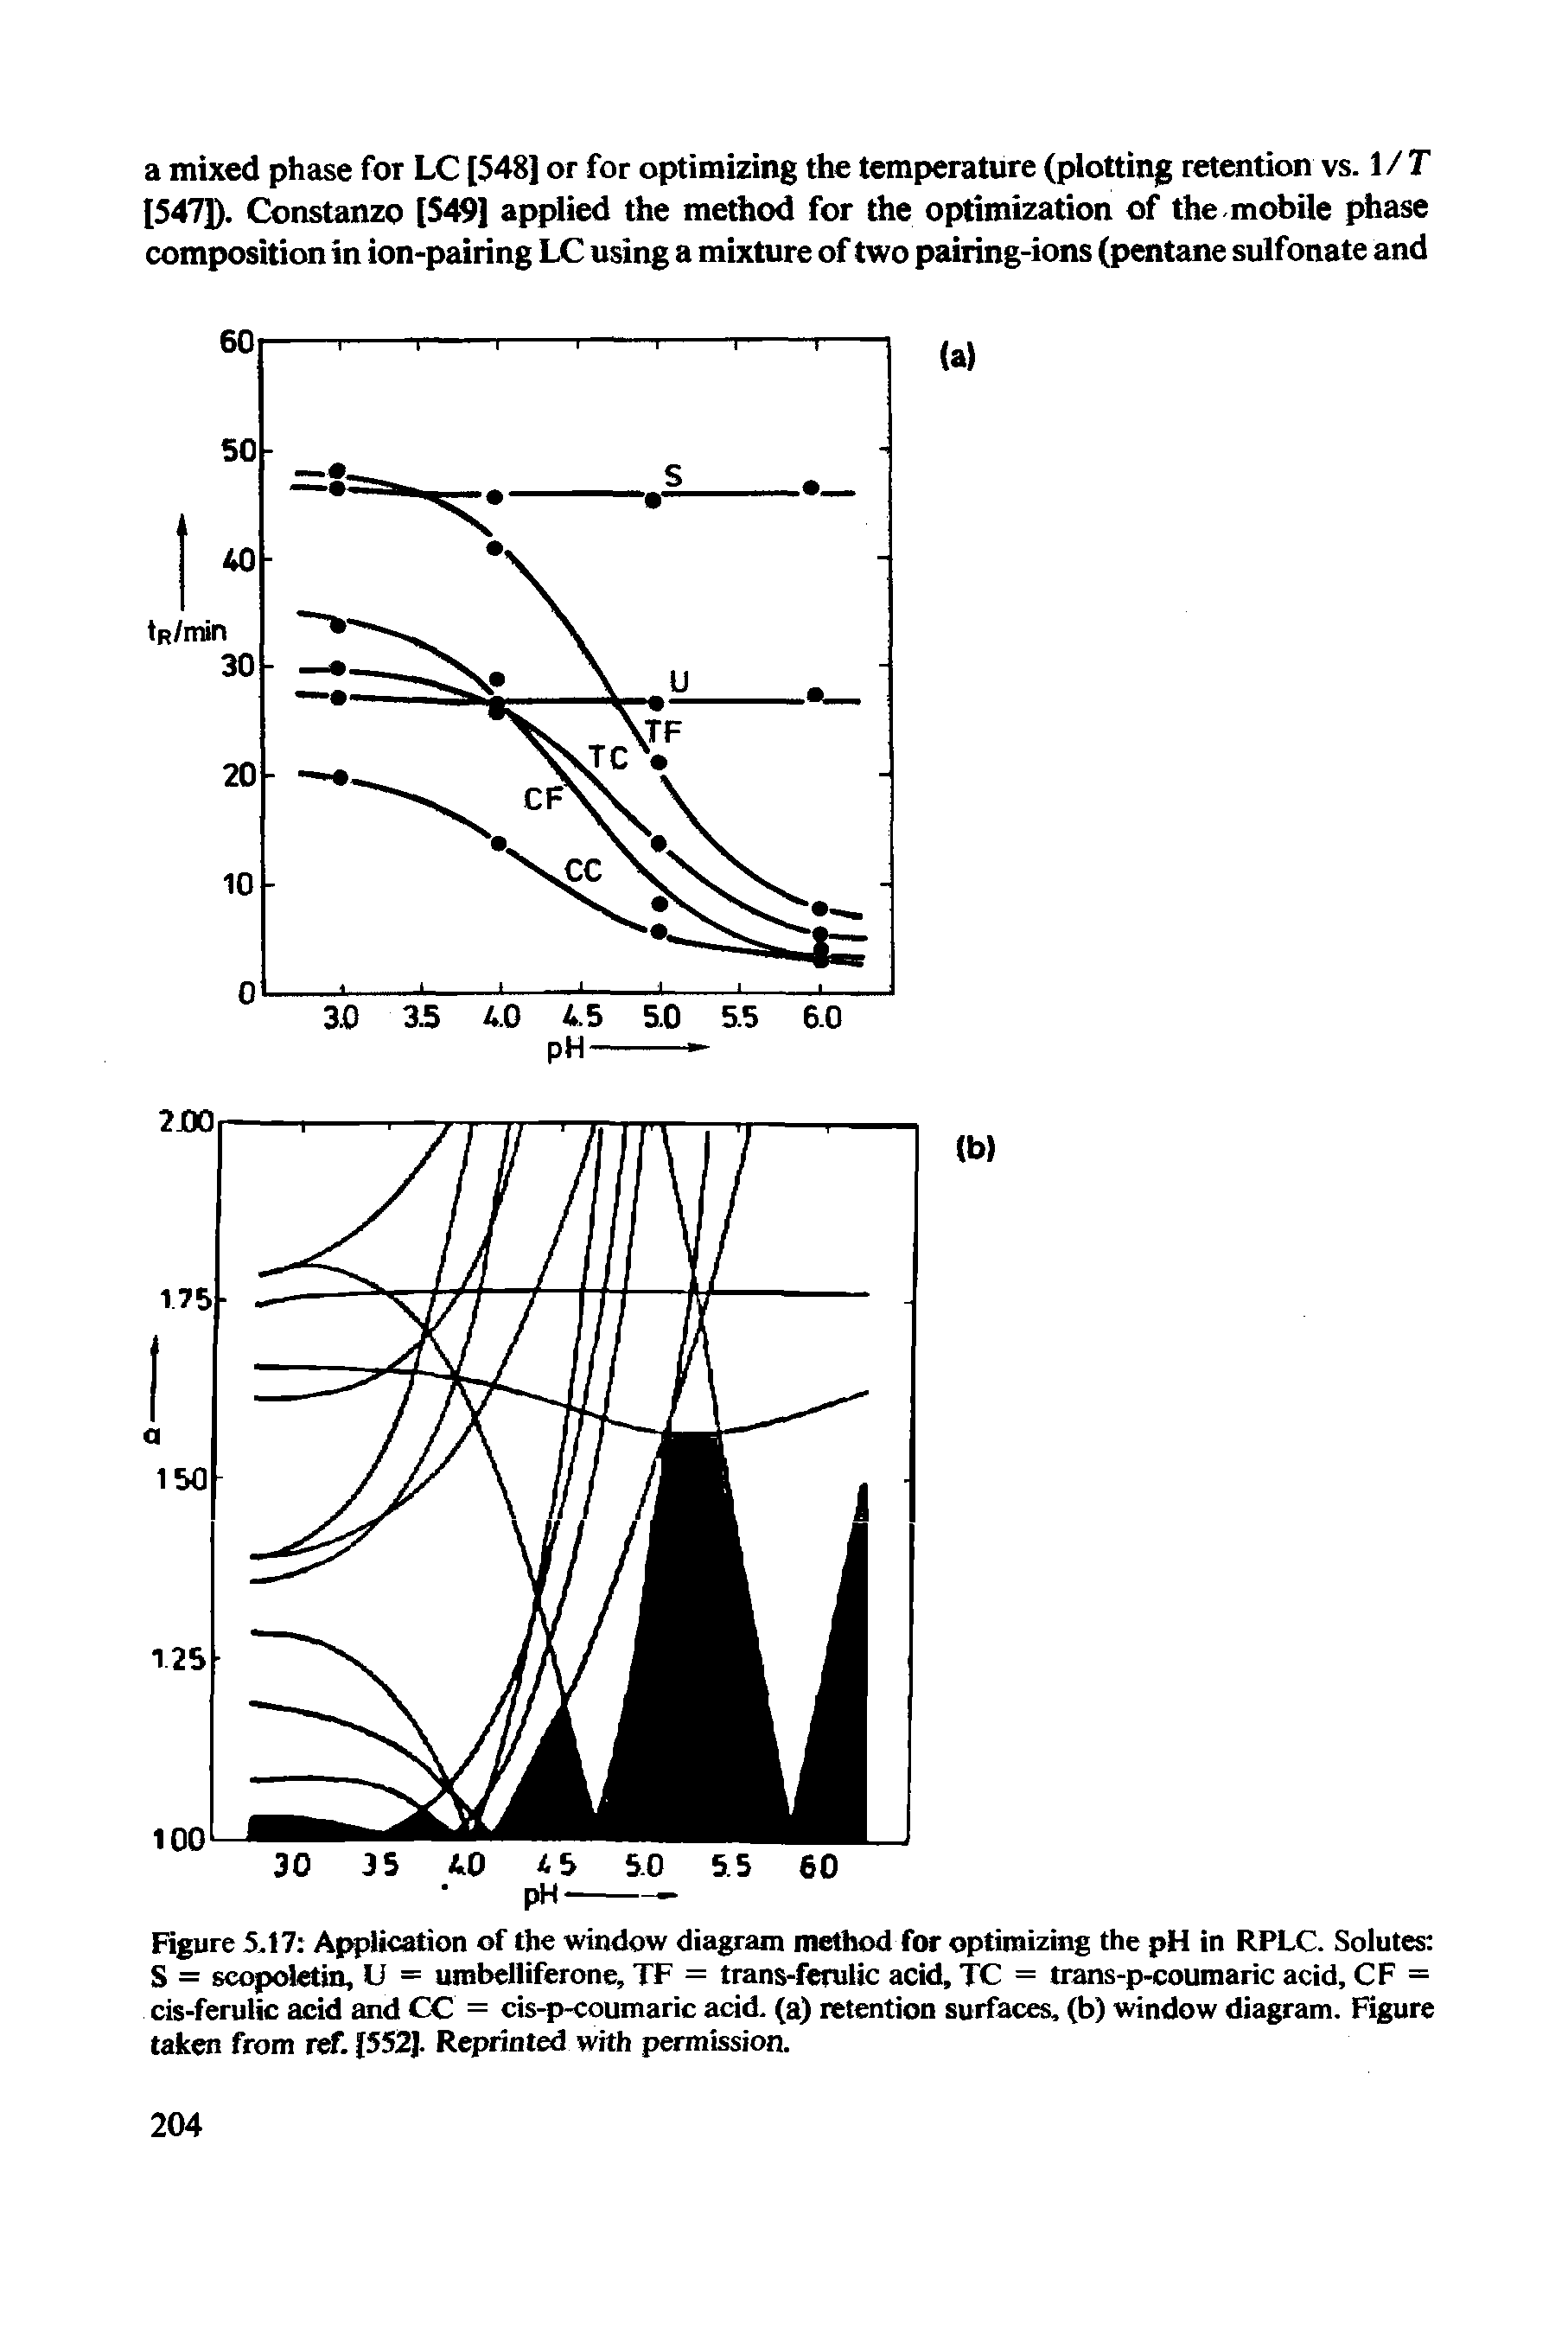 Figure 5.17 Application of the window diagram method for optimizing the pH in RPLC. Solutes S = scopoletin, U = umbelliferone, TF = trans-ferulic acid, TC = trans-p-coumaric acid, CF = cis-feruiic acid and CC = cis-p-coumaric acid, (a) retention surfaces, (b) window diagram. Figure taken from ref. (552J. Reprinted with permission.